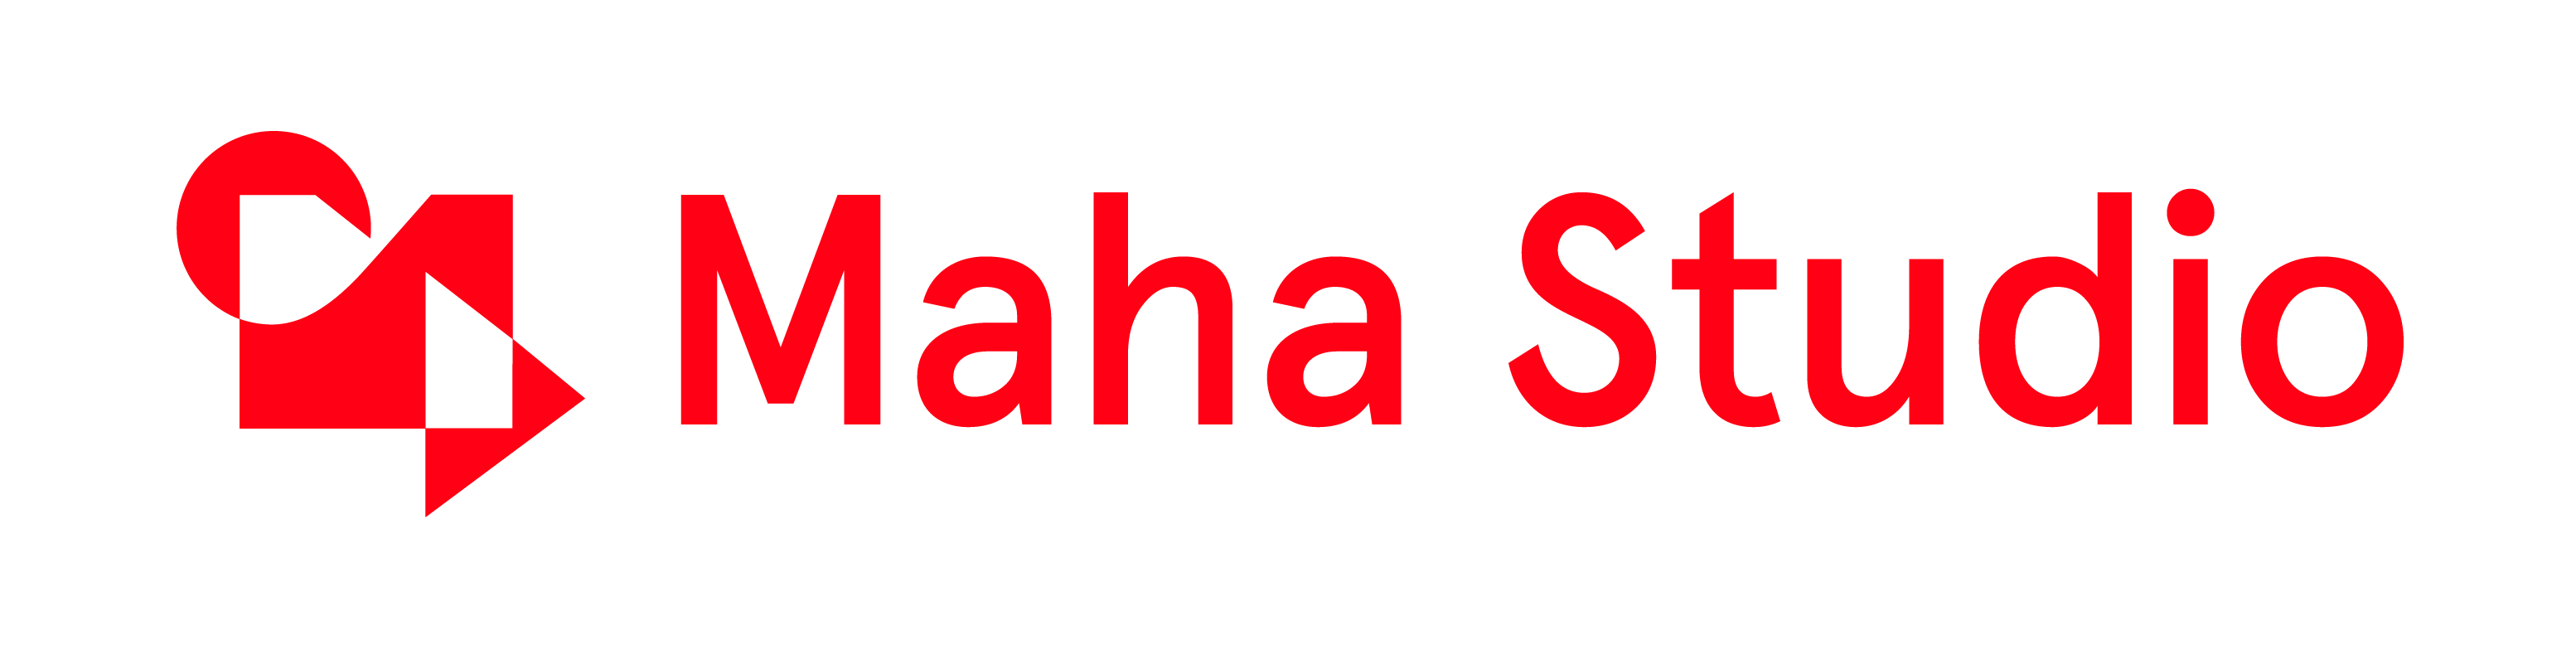 Maha Studio - YouTube Video Agentur